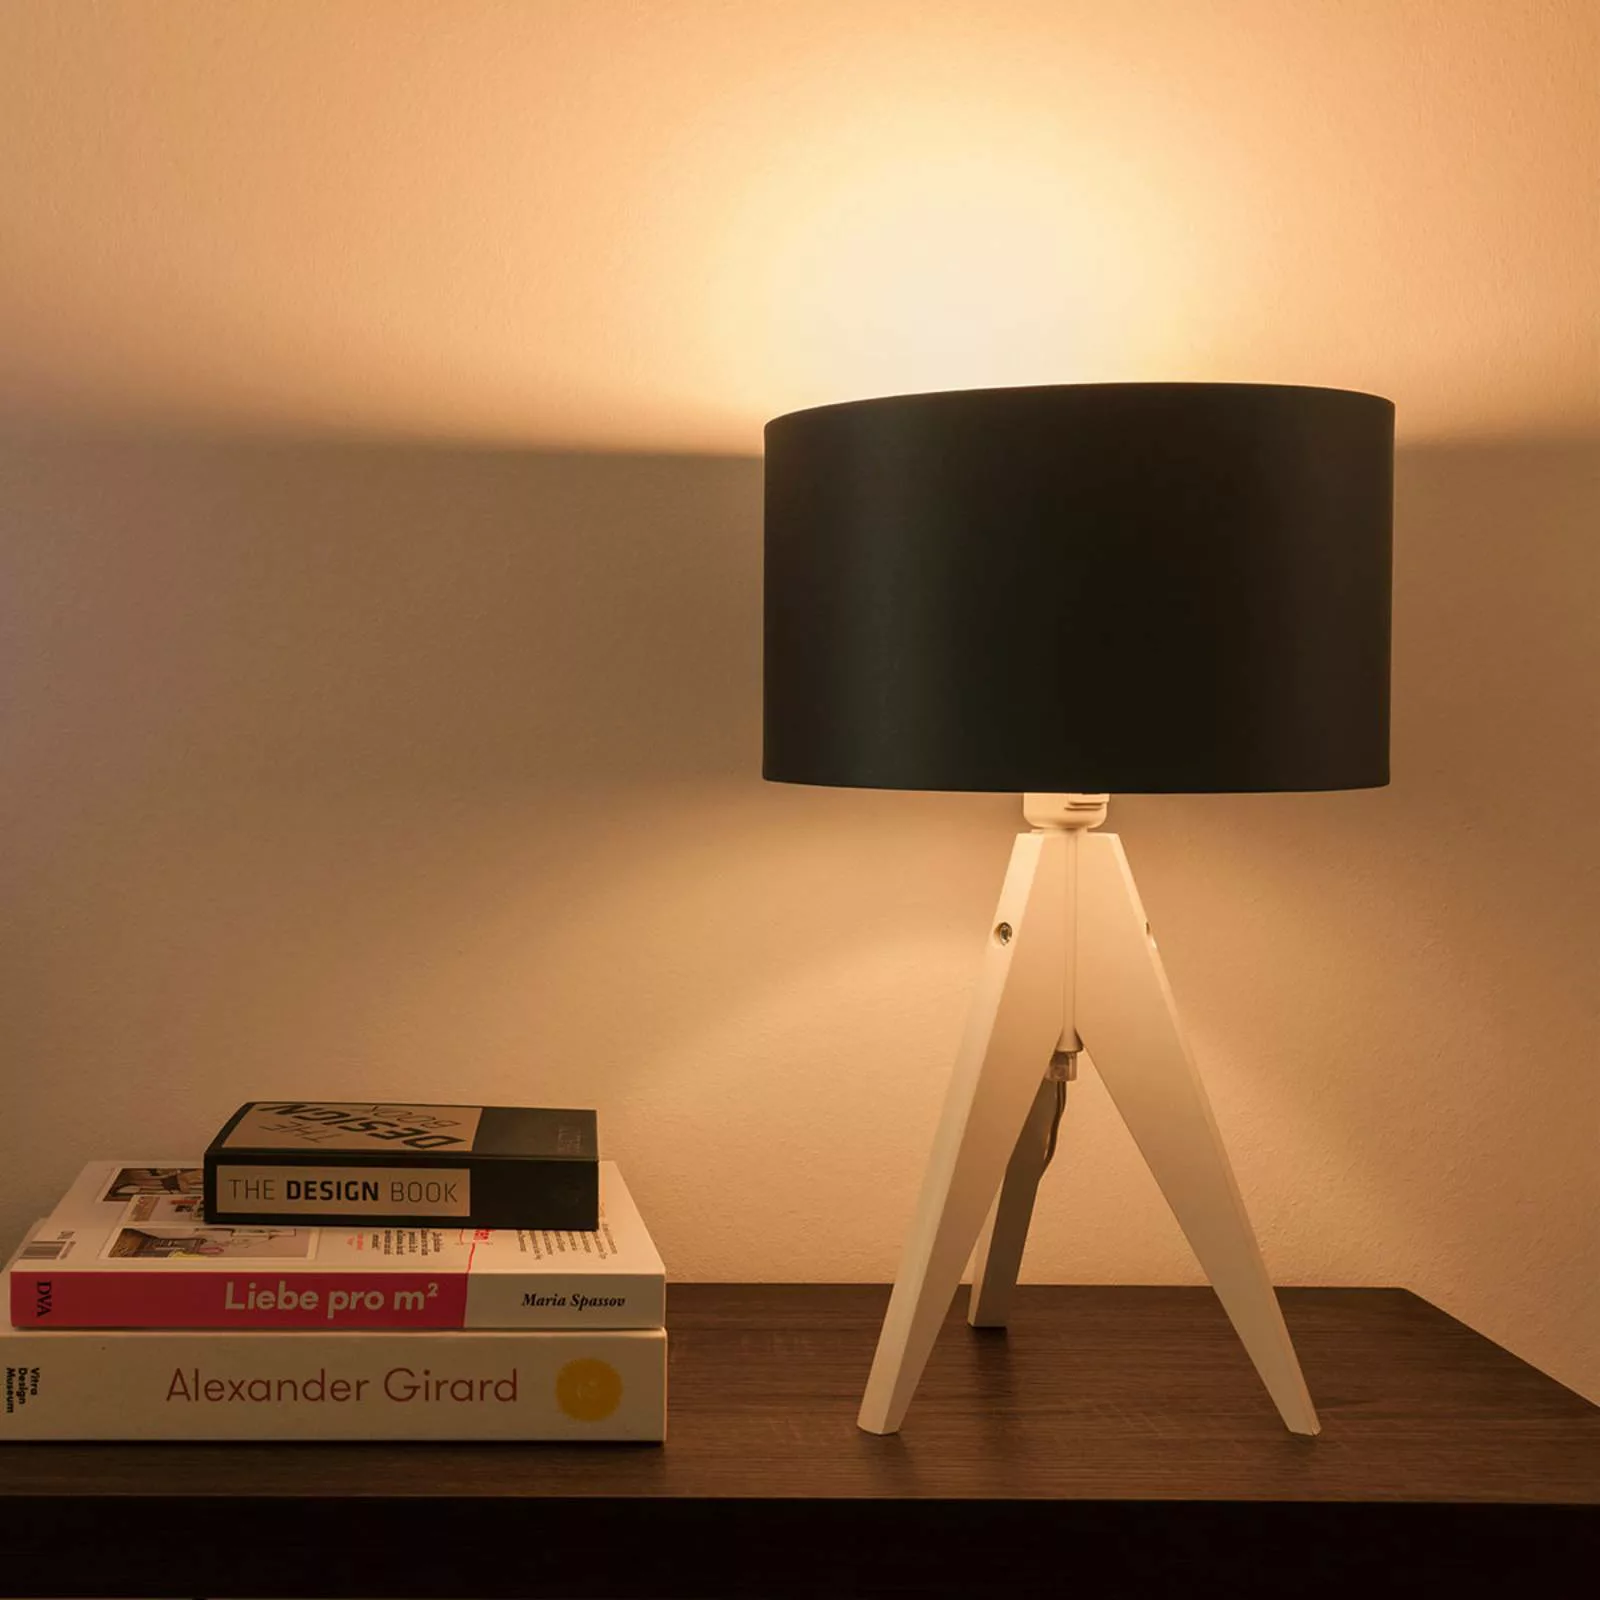 Müller Licht tint white+color LED-Lampe E27 9W günstig online kaufen